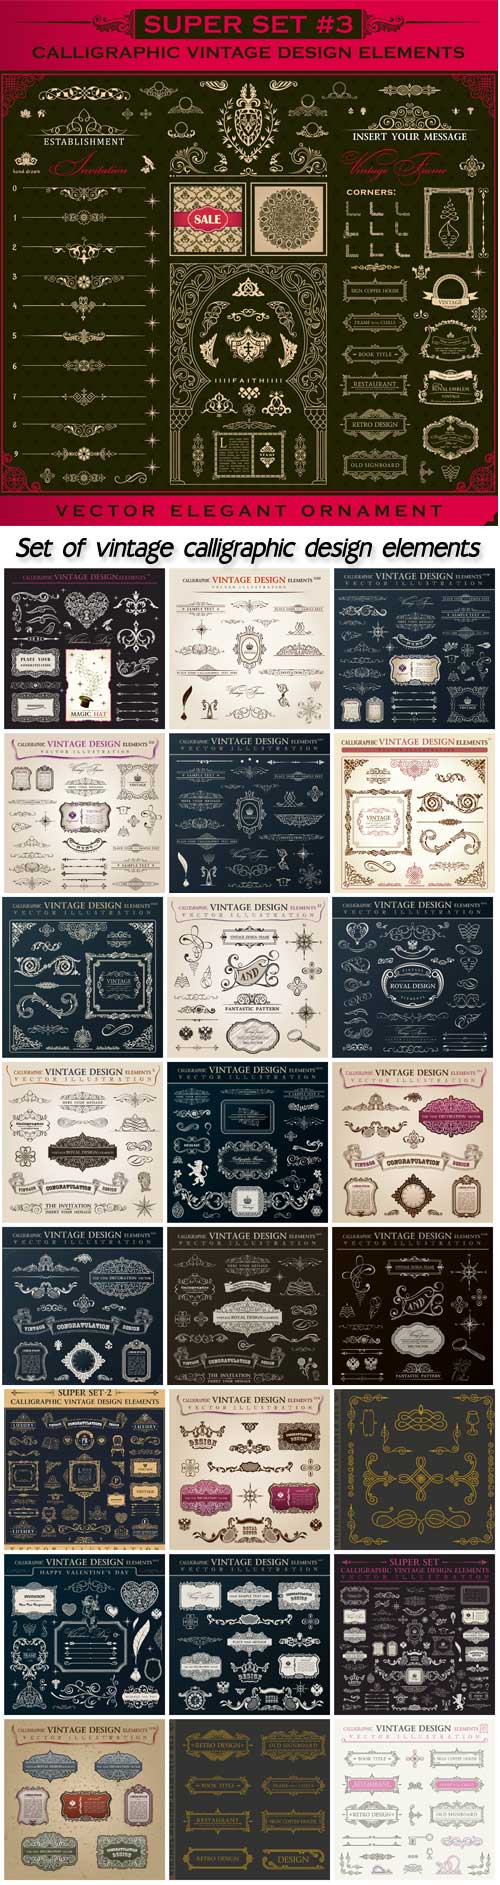 Set of vintage calligraphic design elements in vector